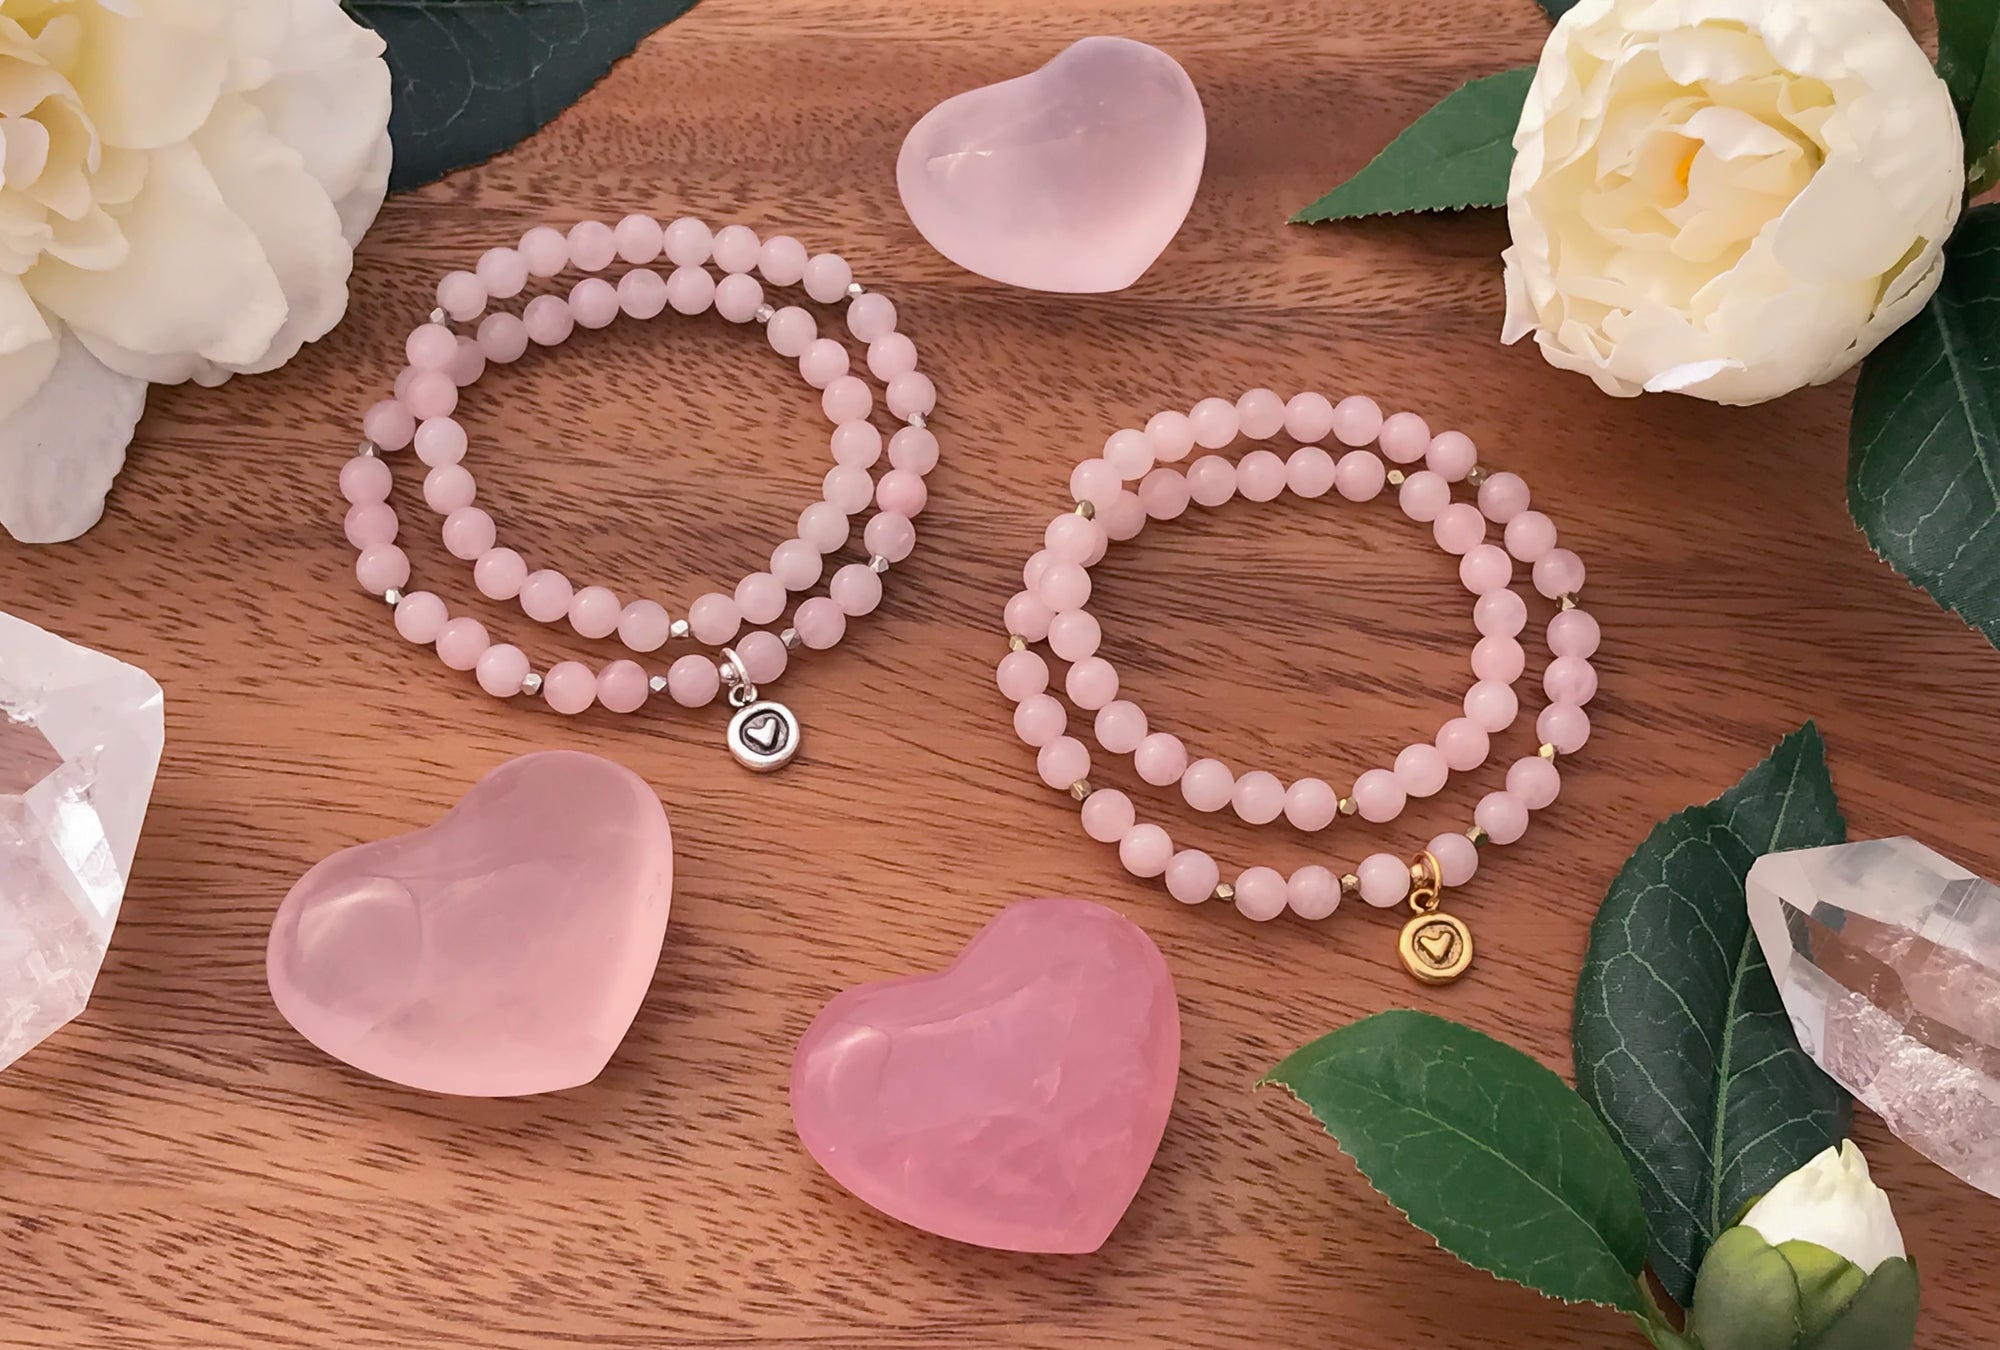 SELF-LOVE Rose Quartz Mala Wrap Bracelet with Heart Charm, Gold or Silver